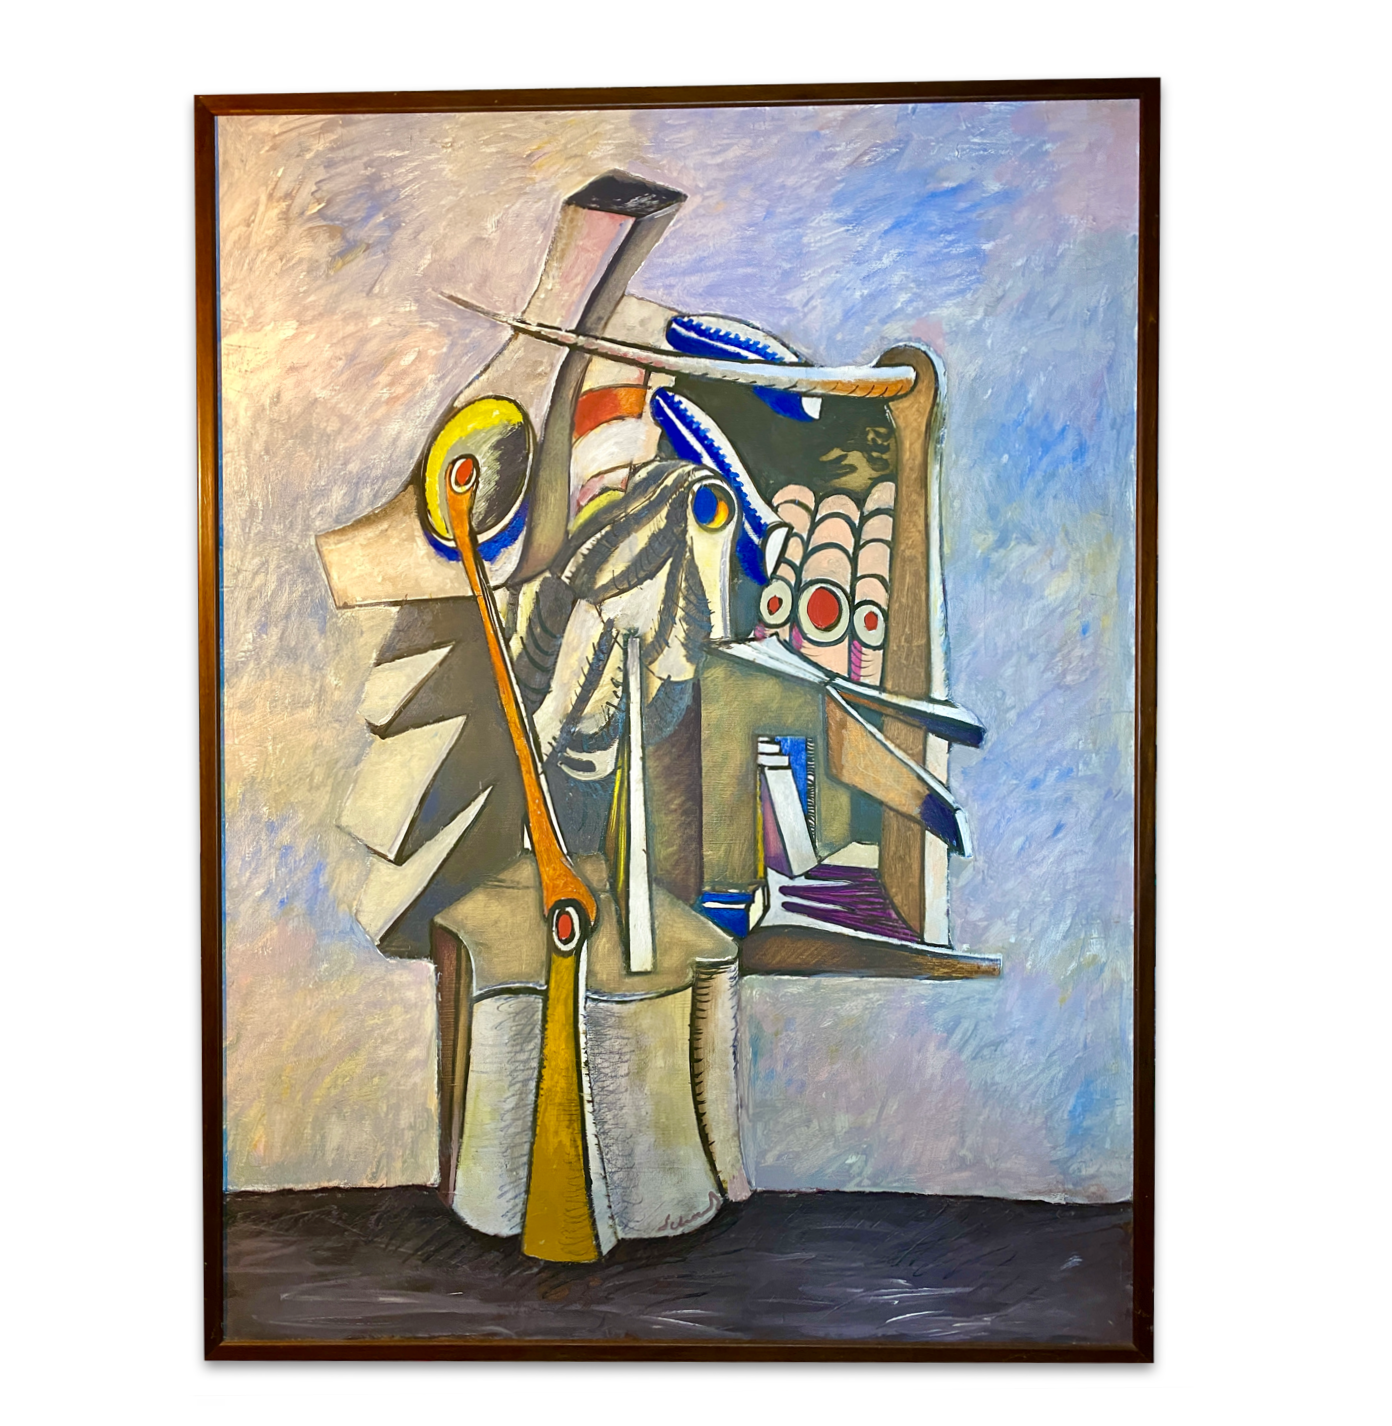 Jean-Claude Schenck 1928-2012, rare cubist constructivist work of the 80s.